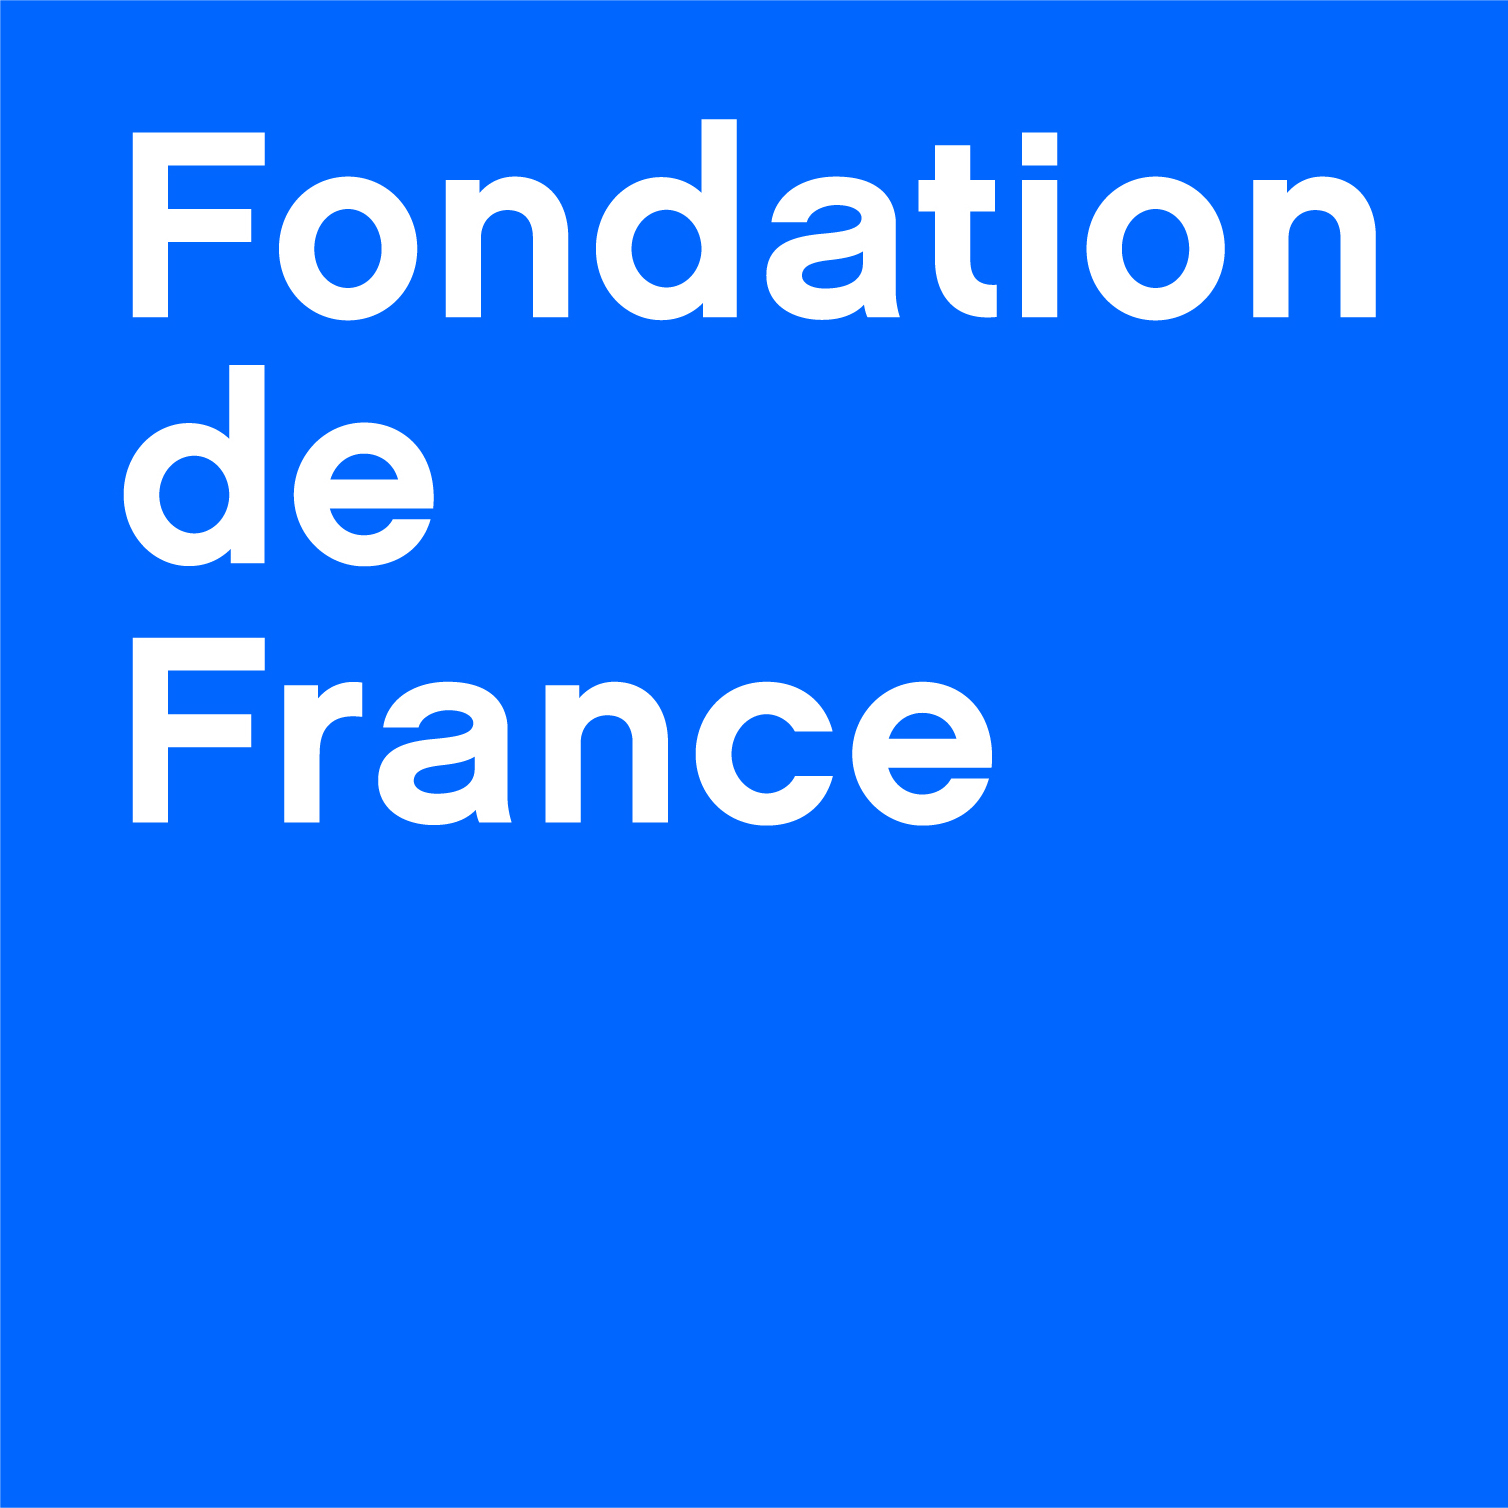 Fondation de France logo